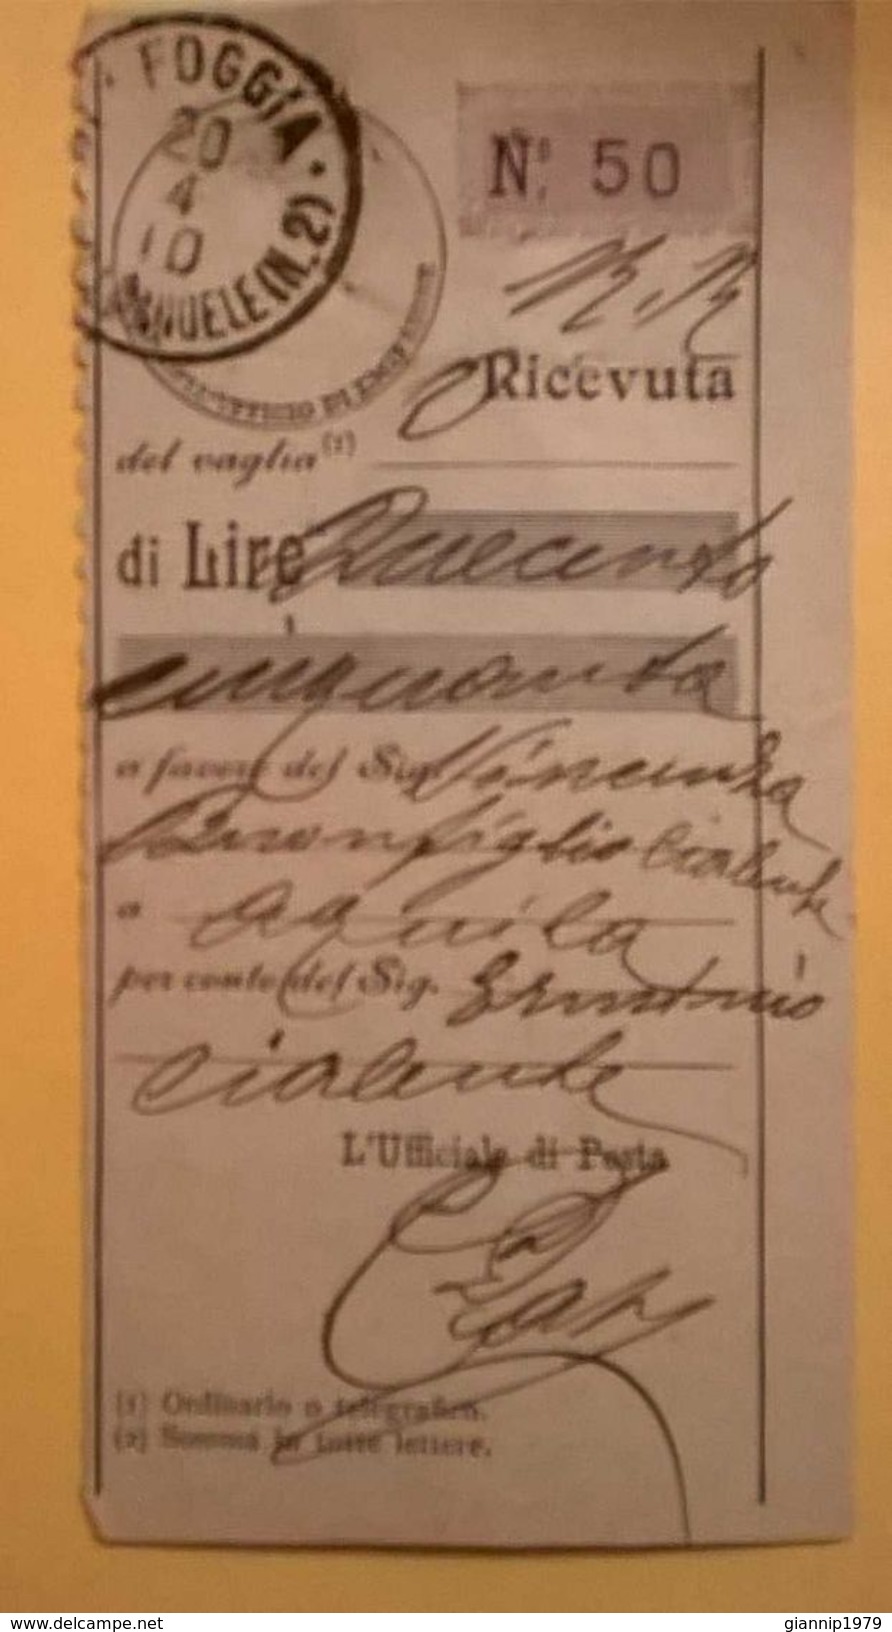 VAGLIA POSTALE RICEVUTA FOGGIA 1910 - Taxe Pour Mandats